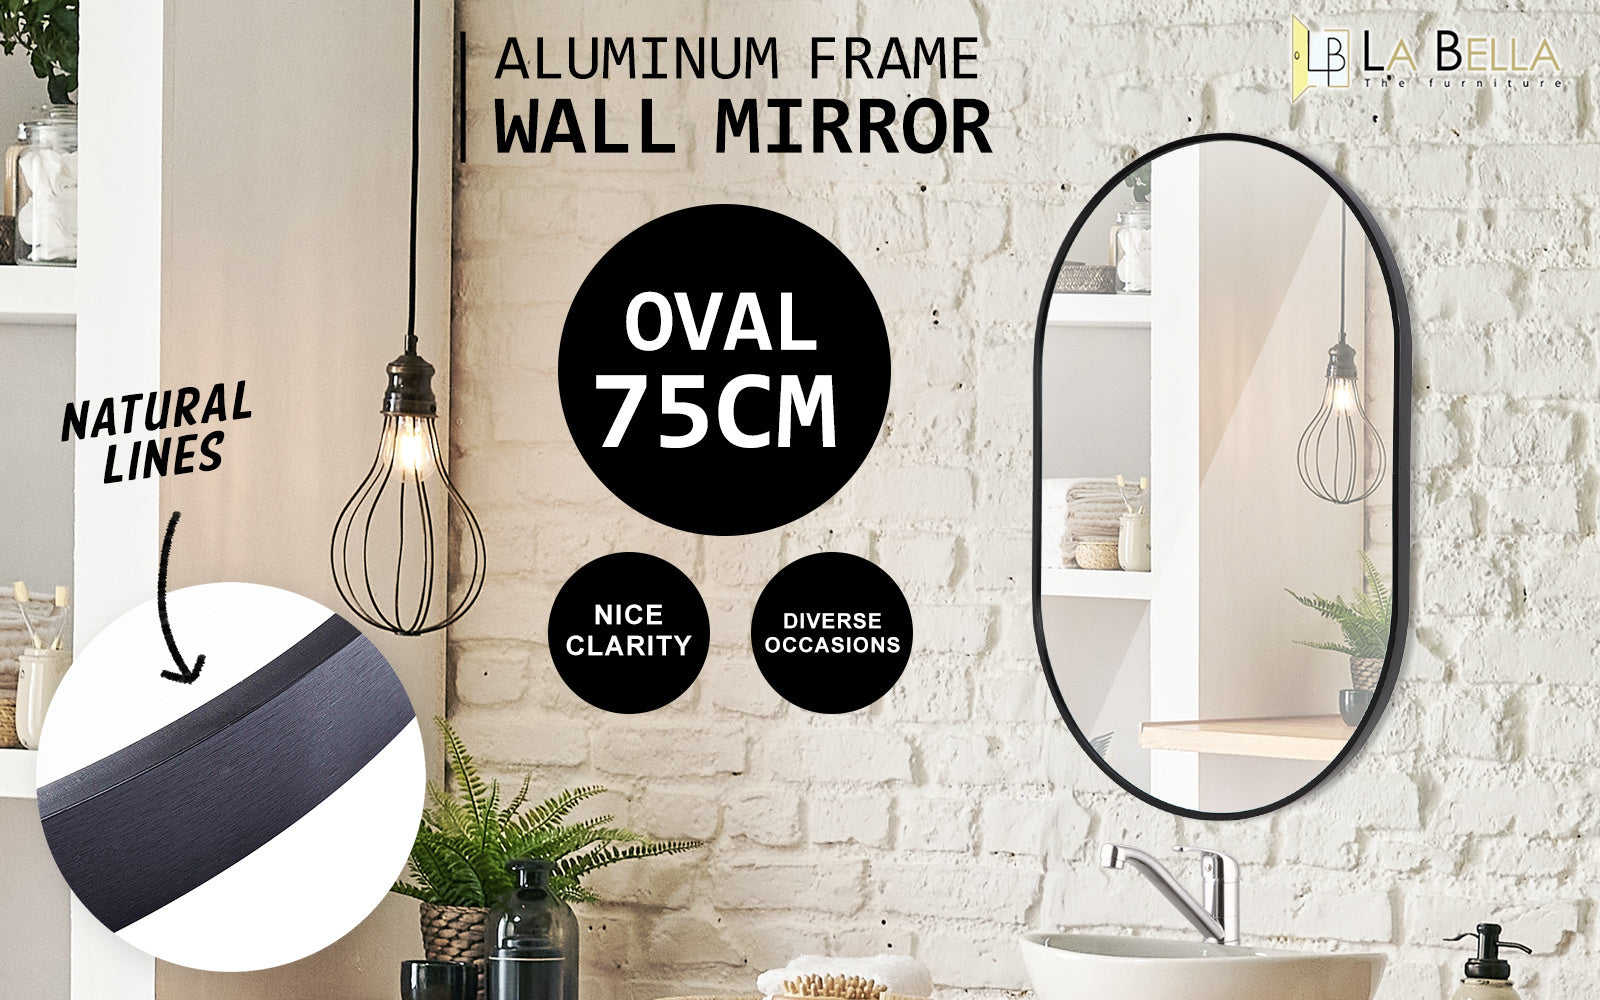 Black Wall Mirror Oval Aluminum Frame Makeup Decor Bathroom Vanity 50 x 75cm - image2